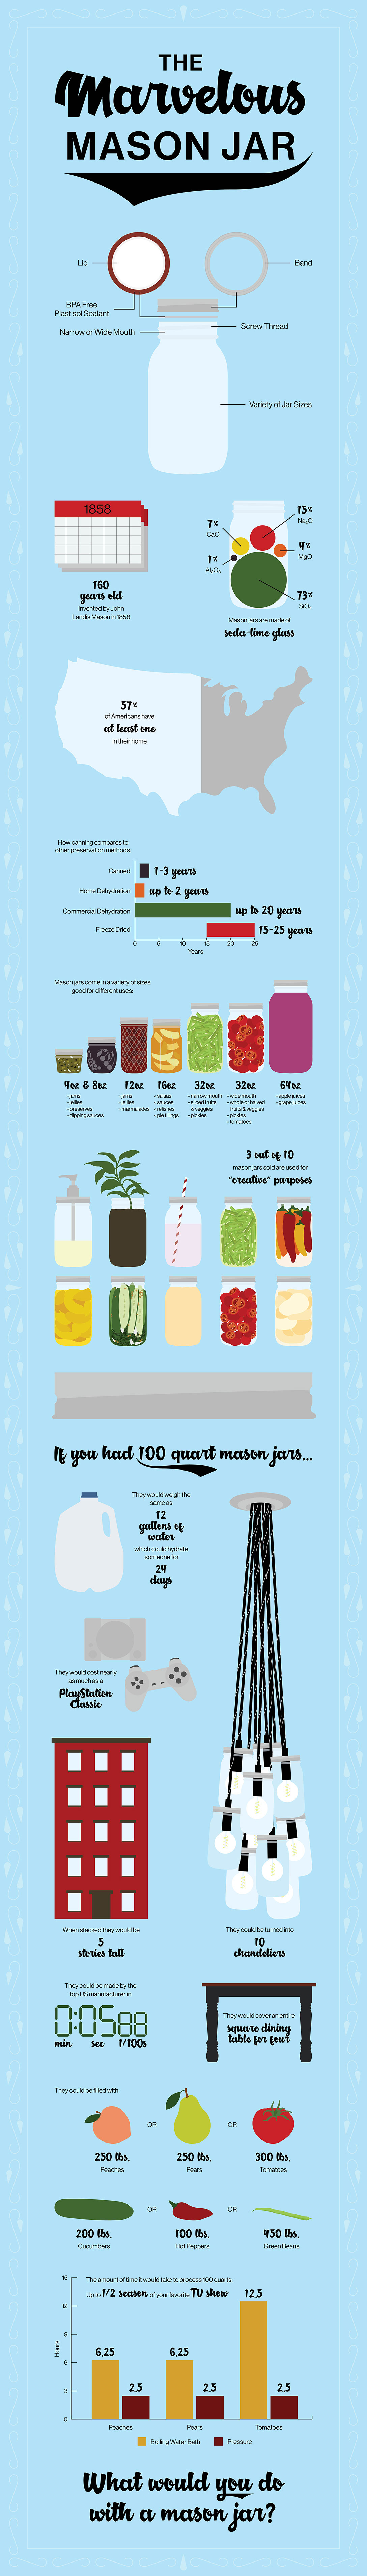 Marvelous Mason Jar infographic